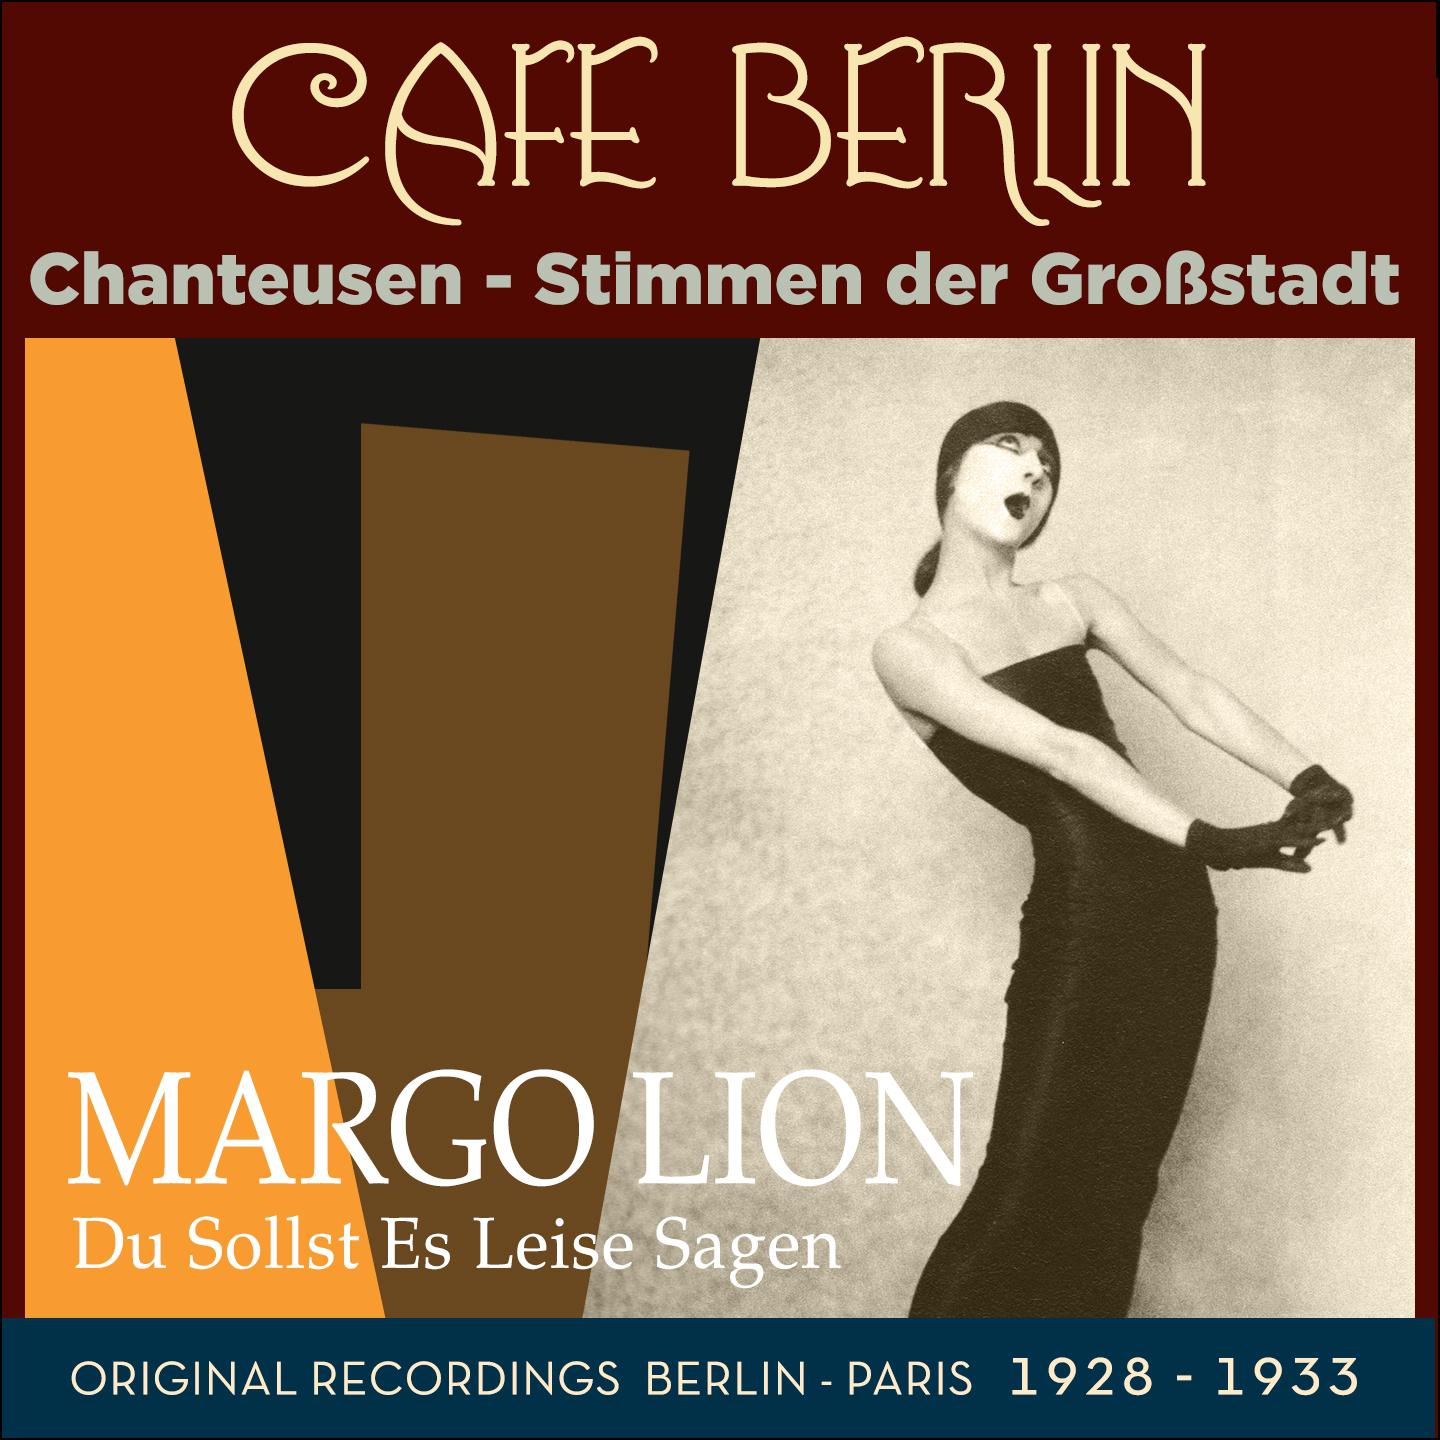 Du sollst es leise sagen (Original recordings berlin - Paris 1928 - 1933)